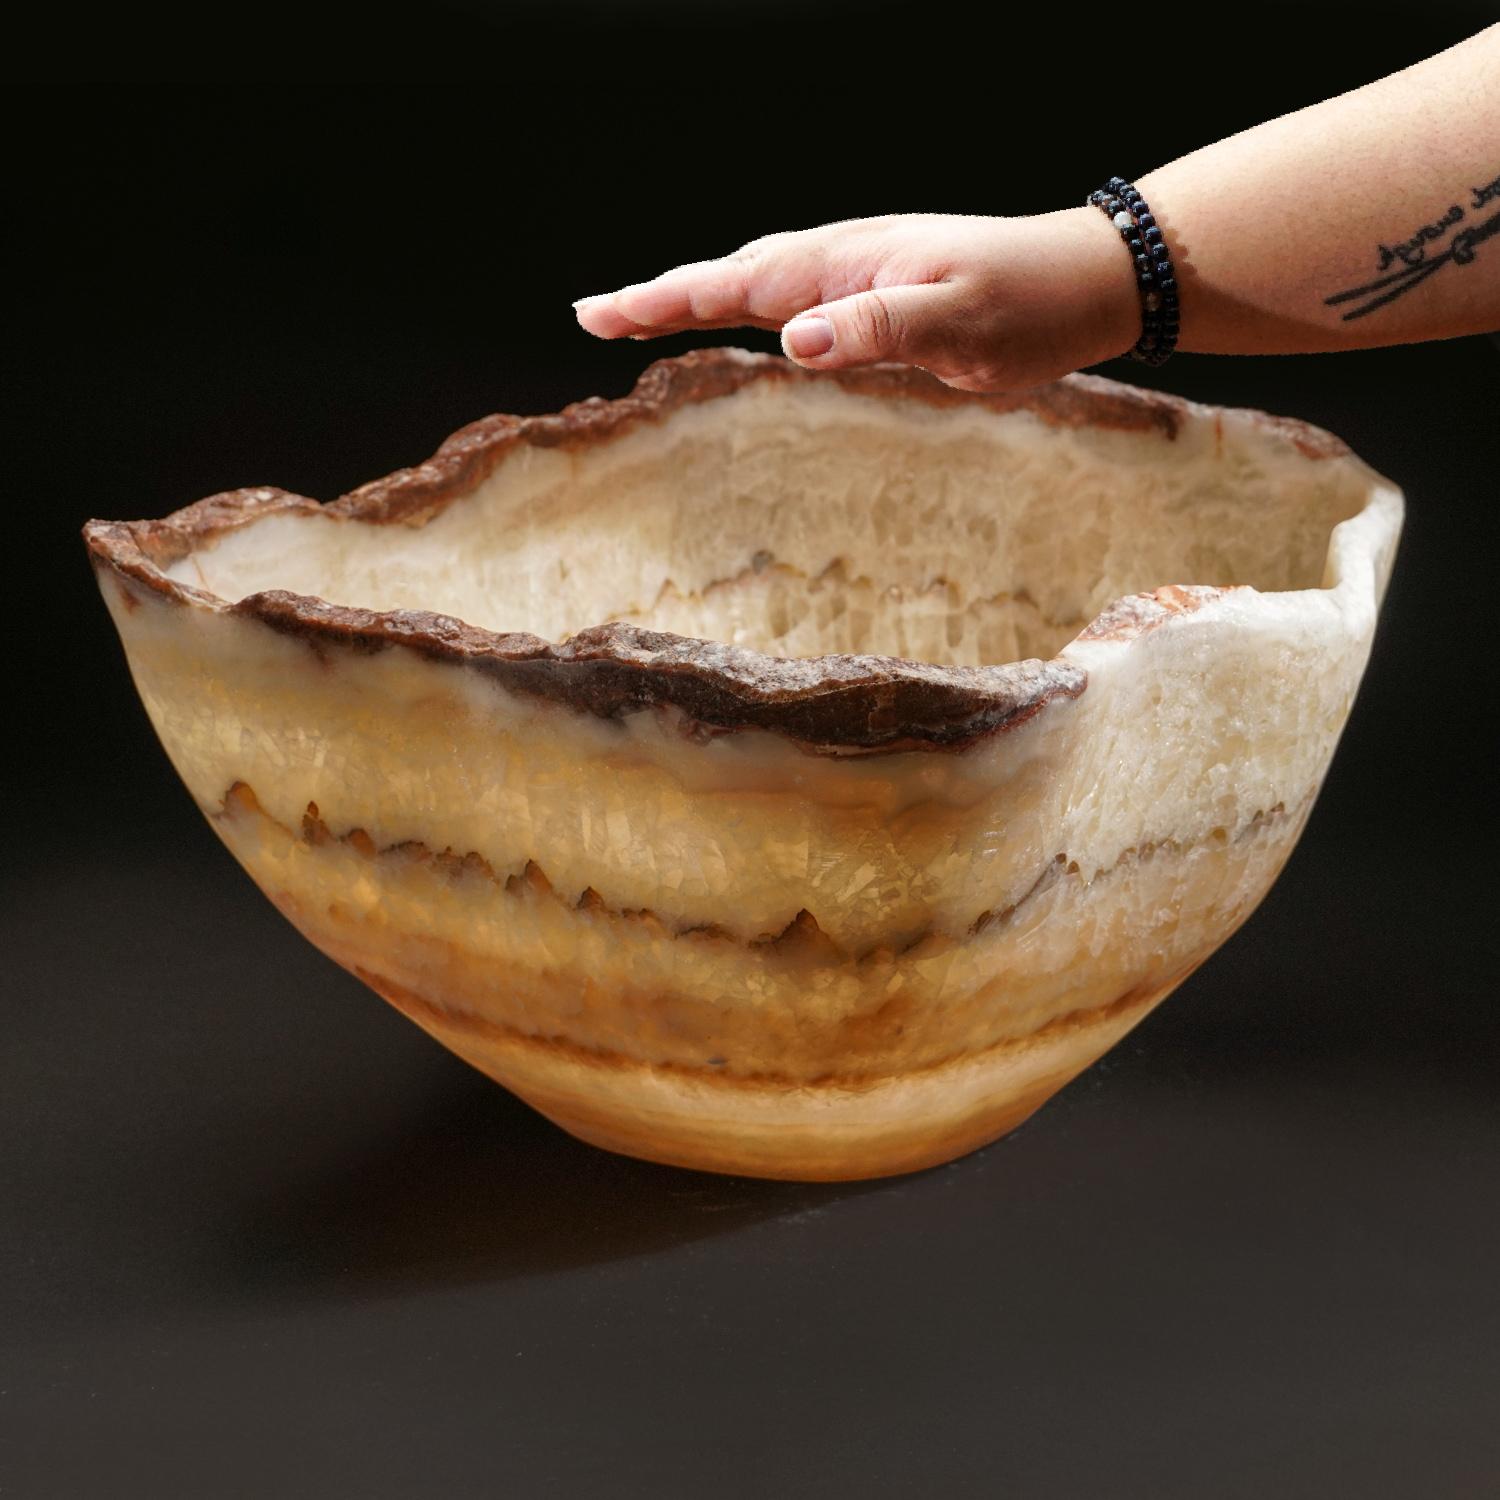 Large Polished Onyx Decorative Bowl from Mexico ( 19.25